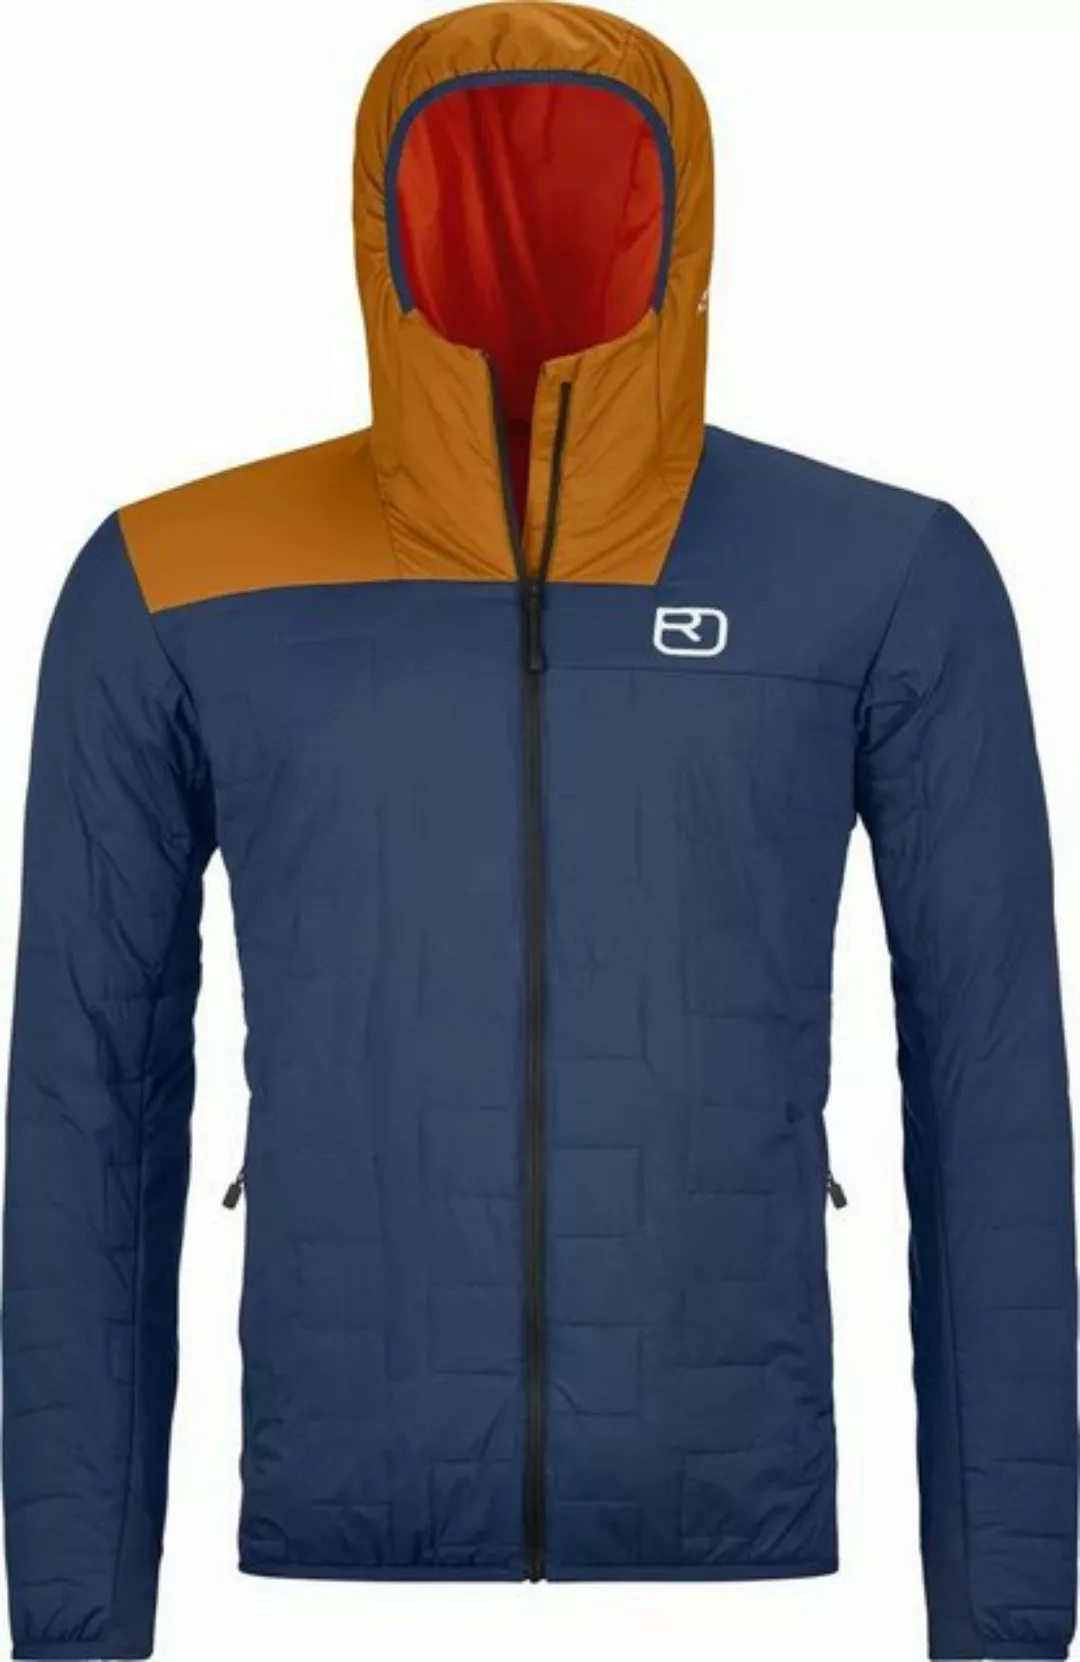 Ortovox Swisswool Piz Badus Jacket Men - Isolationsjacke günstig online kaufen